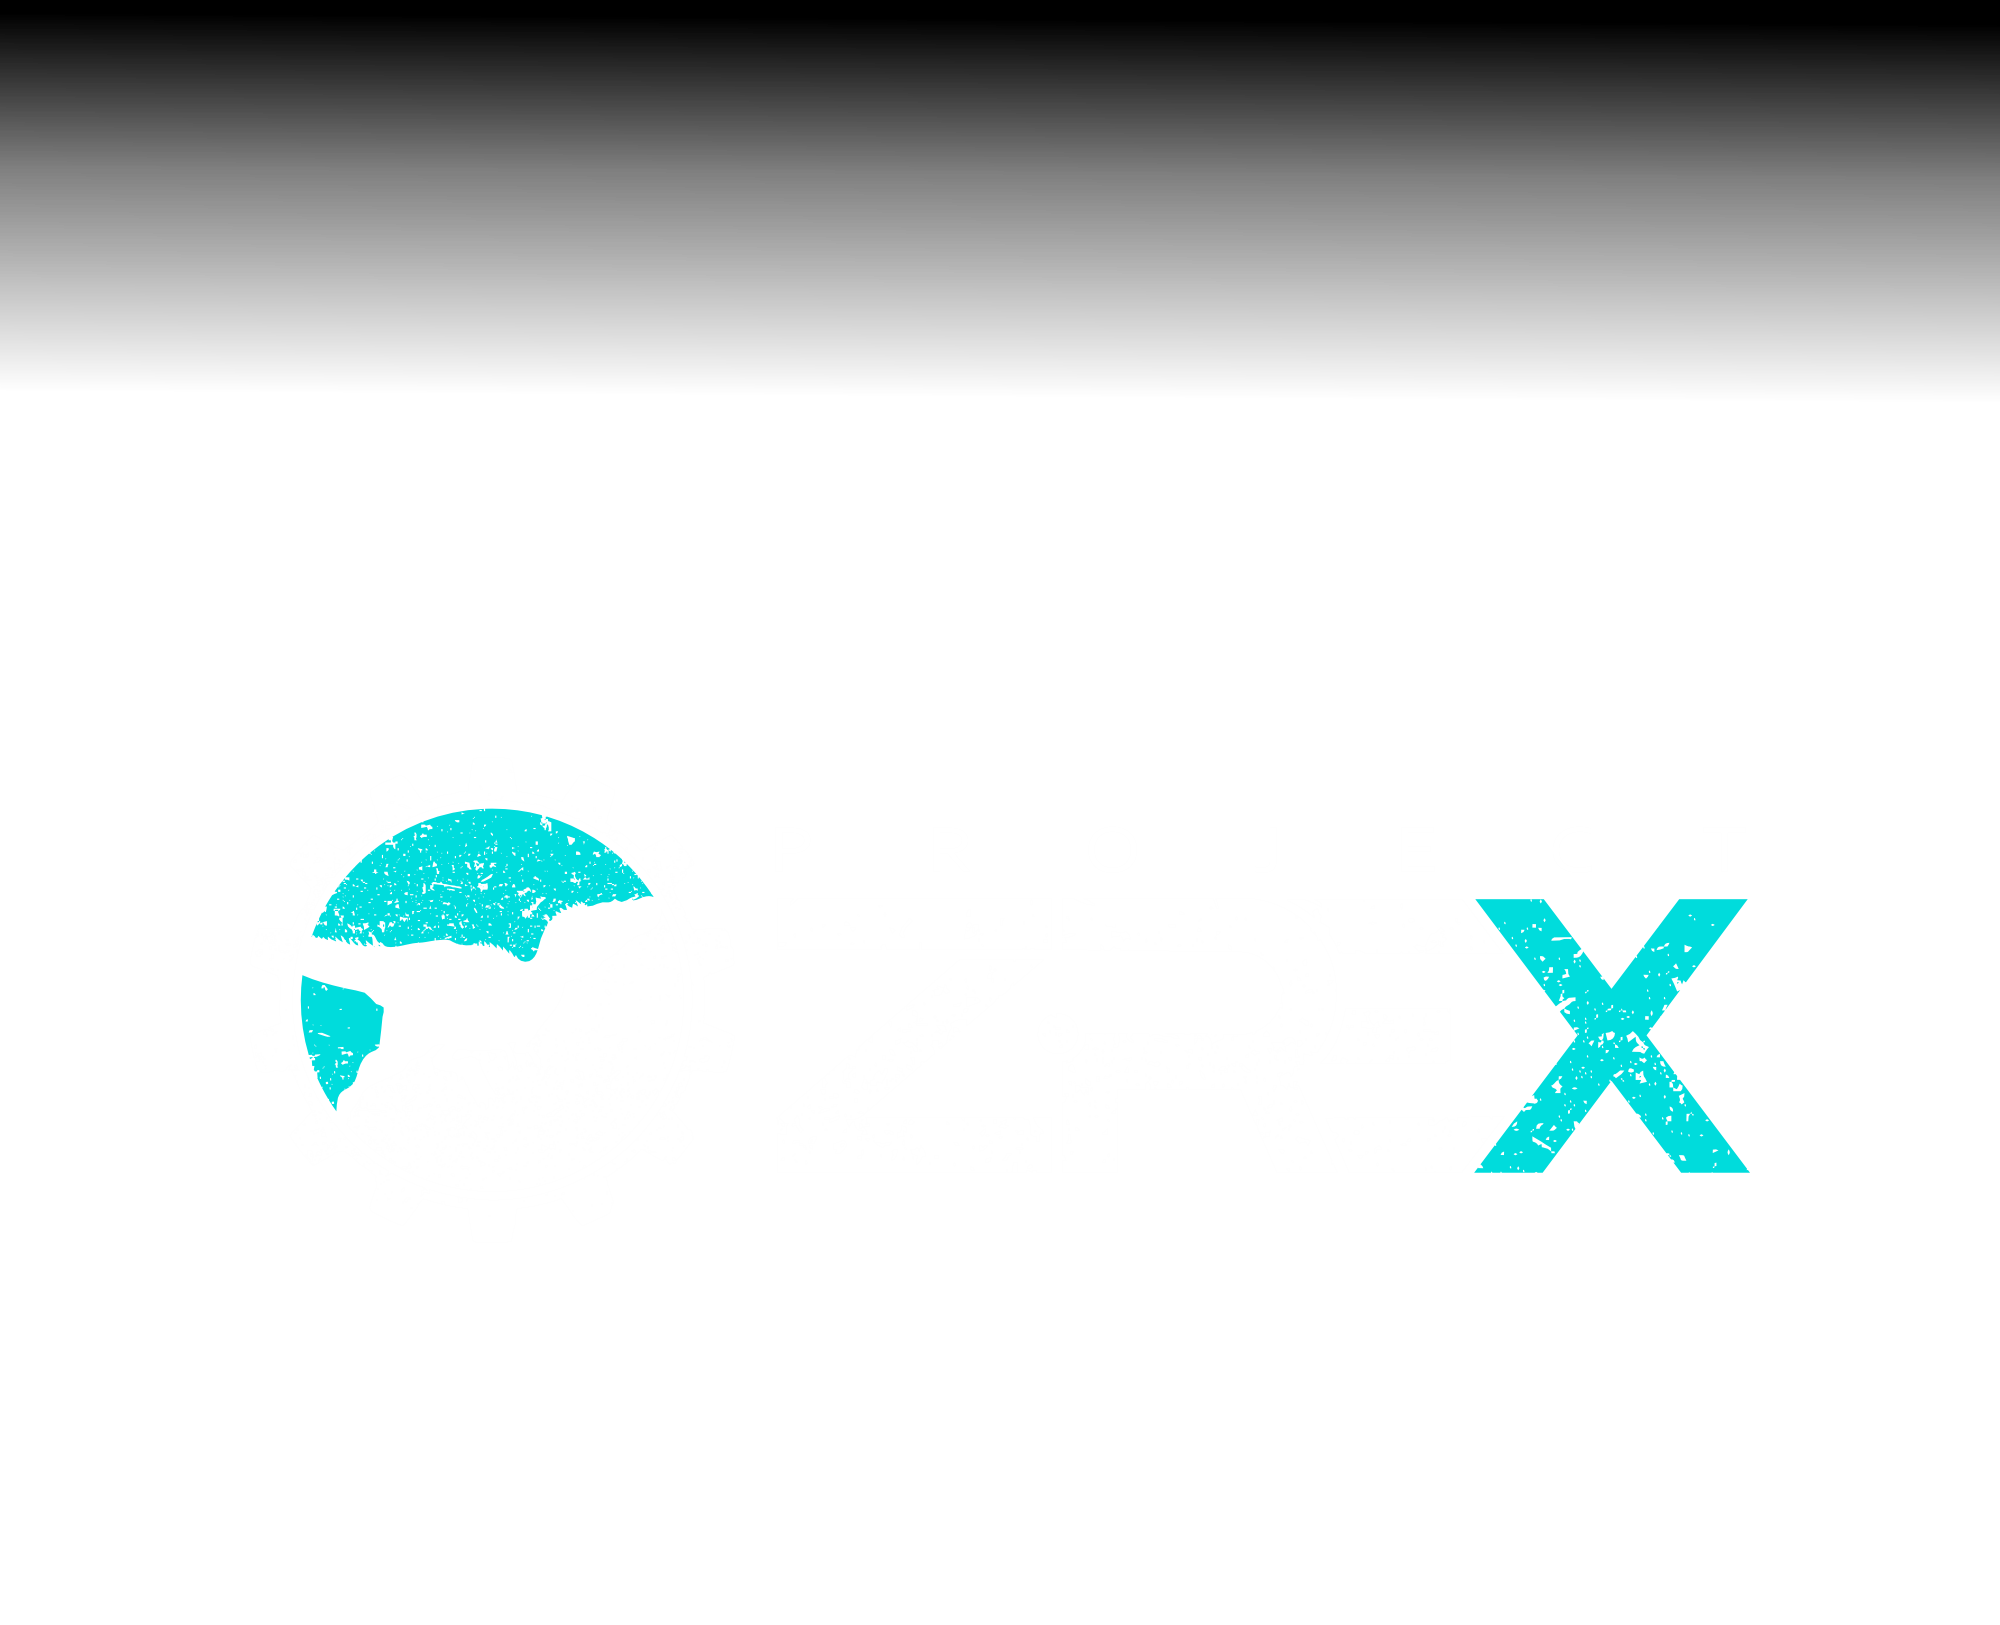 Project ZREX apparel